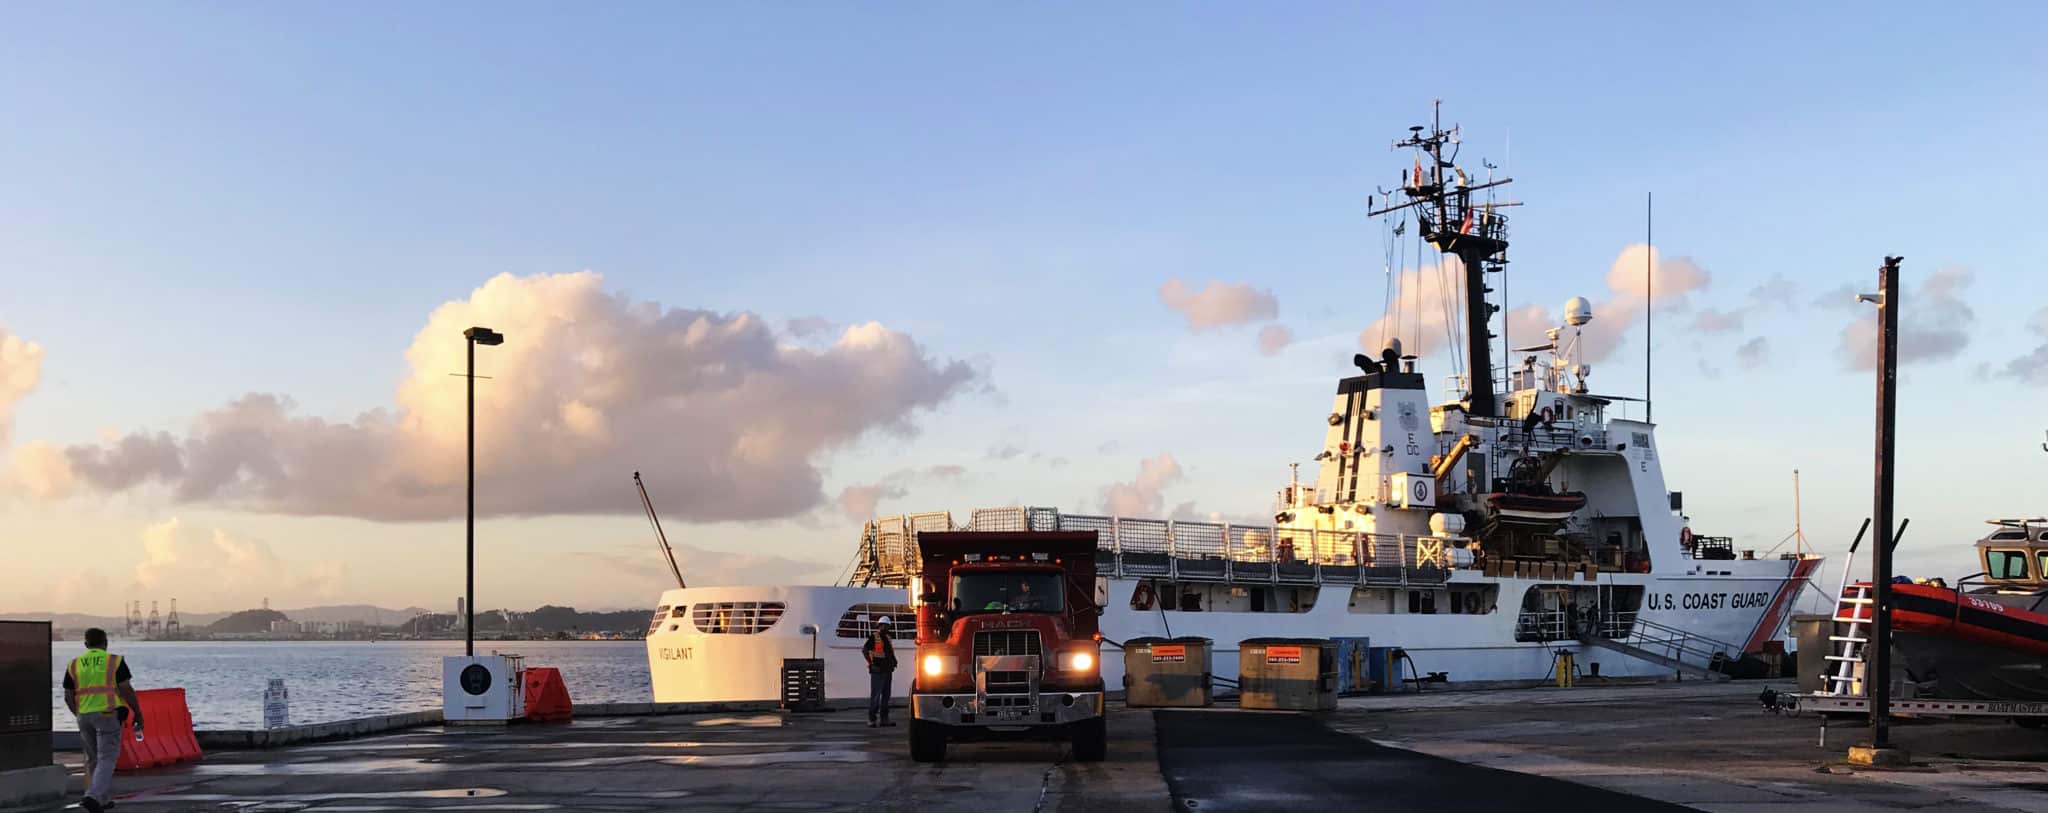 San Juan Piers - US Coast Guard, San Juan, Puerto Rico 1